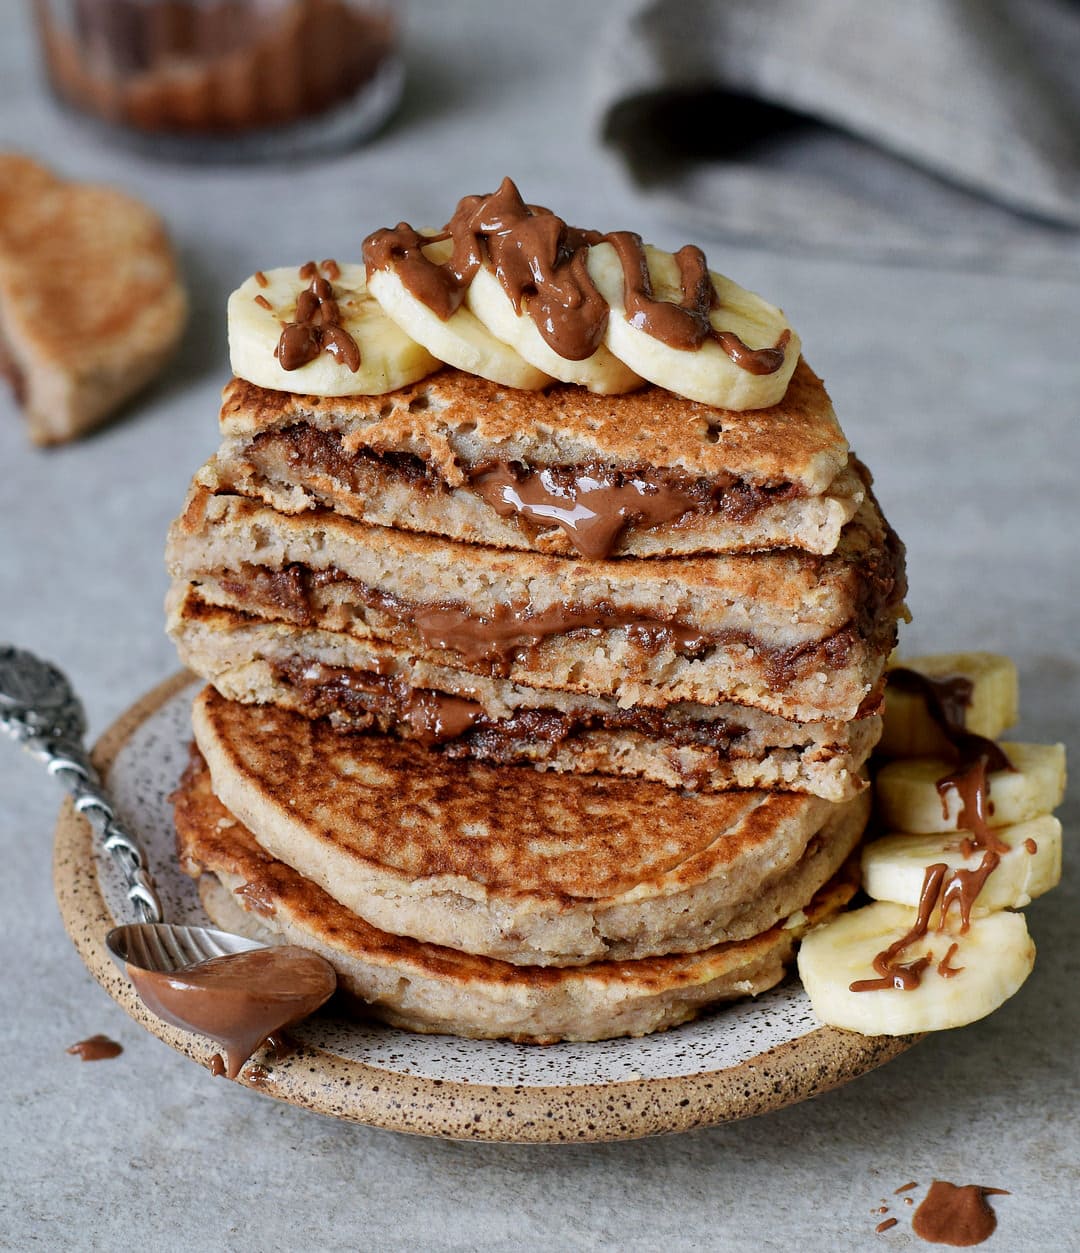 vegan gluten-free chocolate stuffed pancakes with banana slices